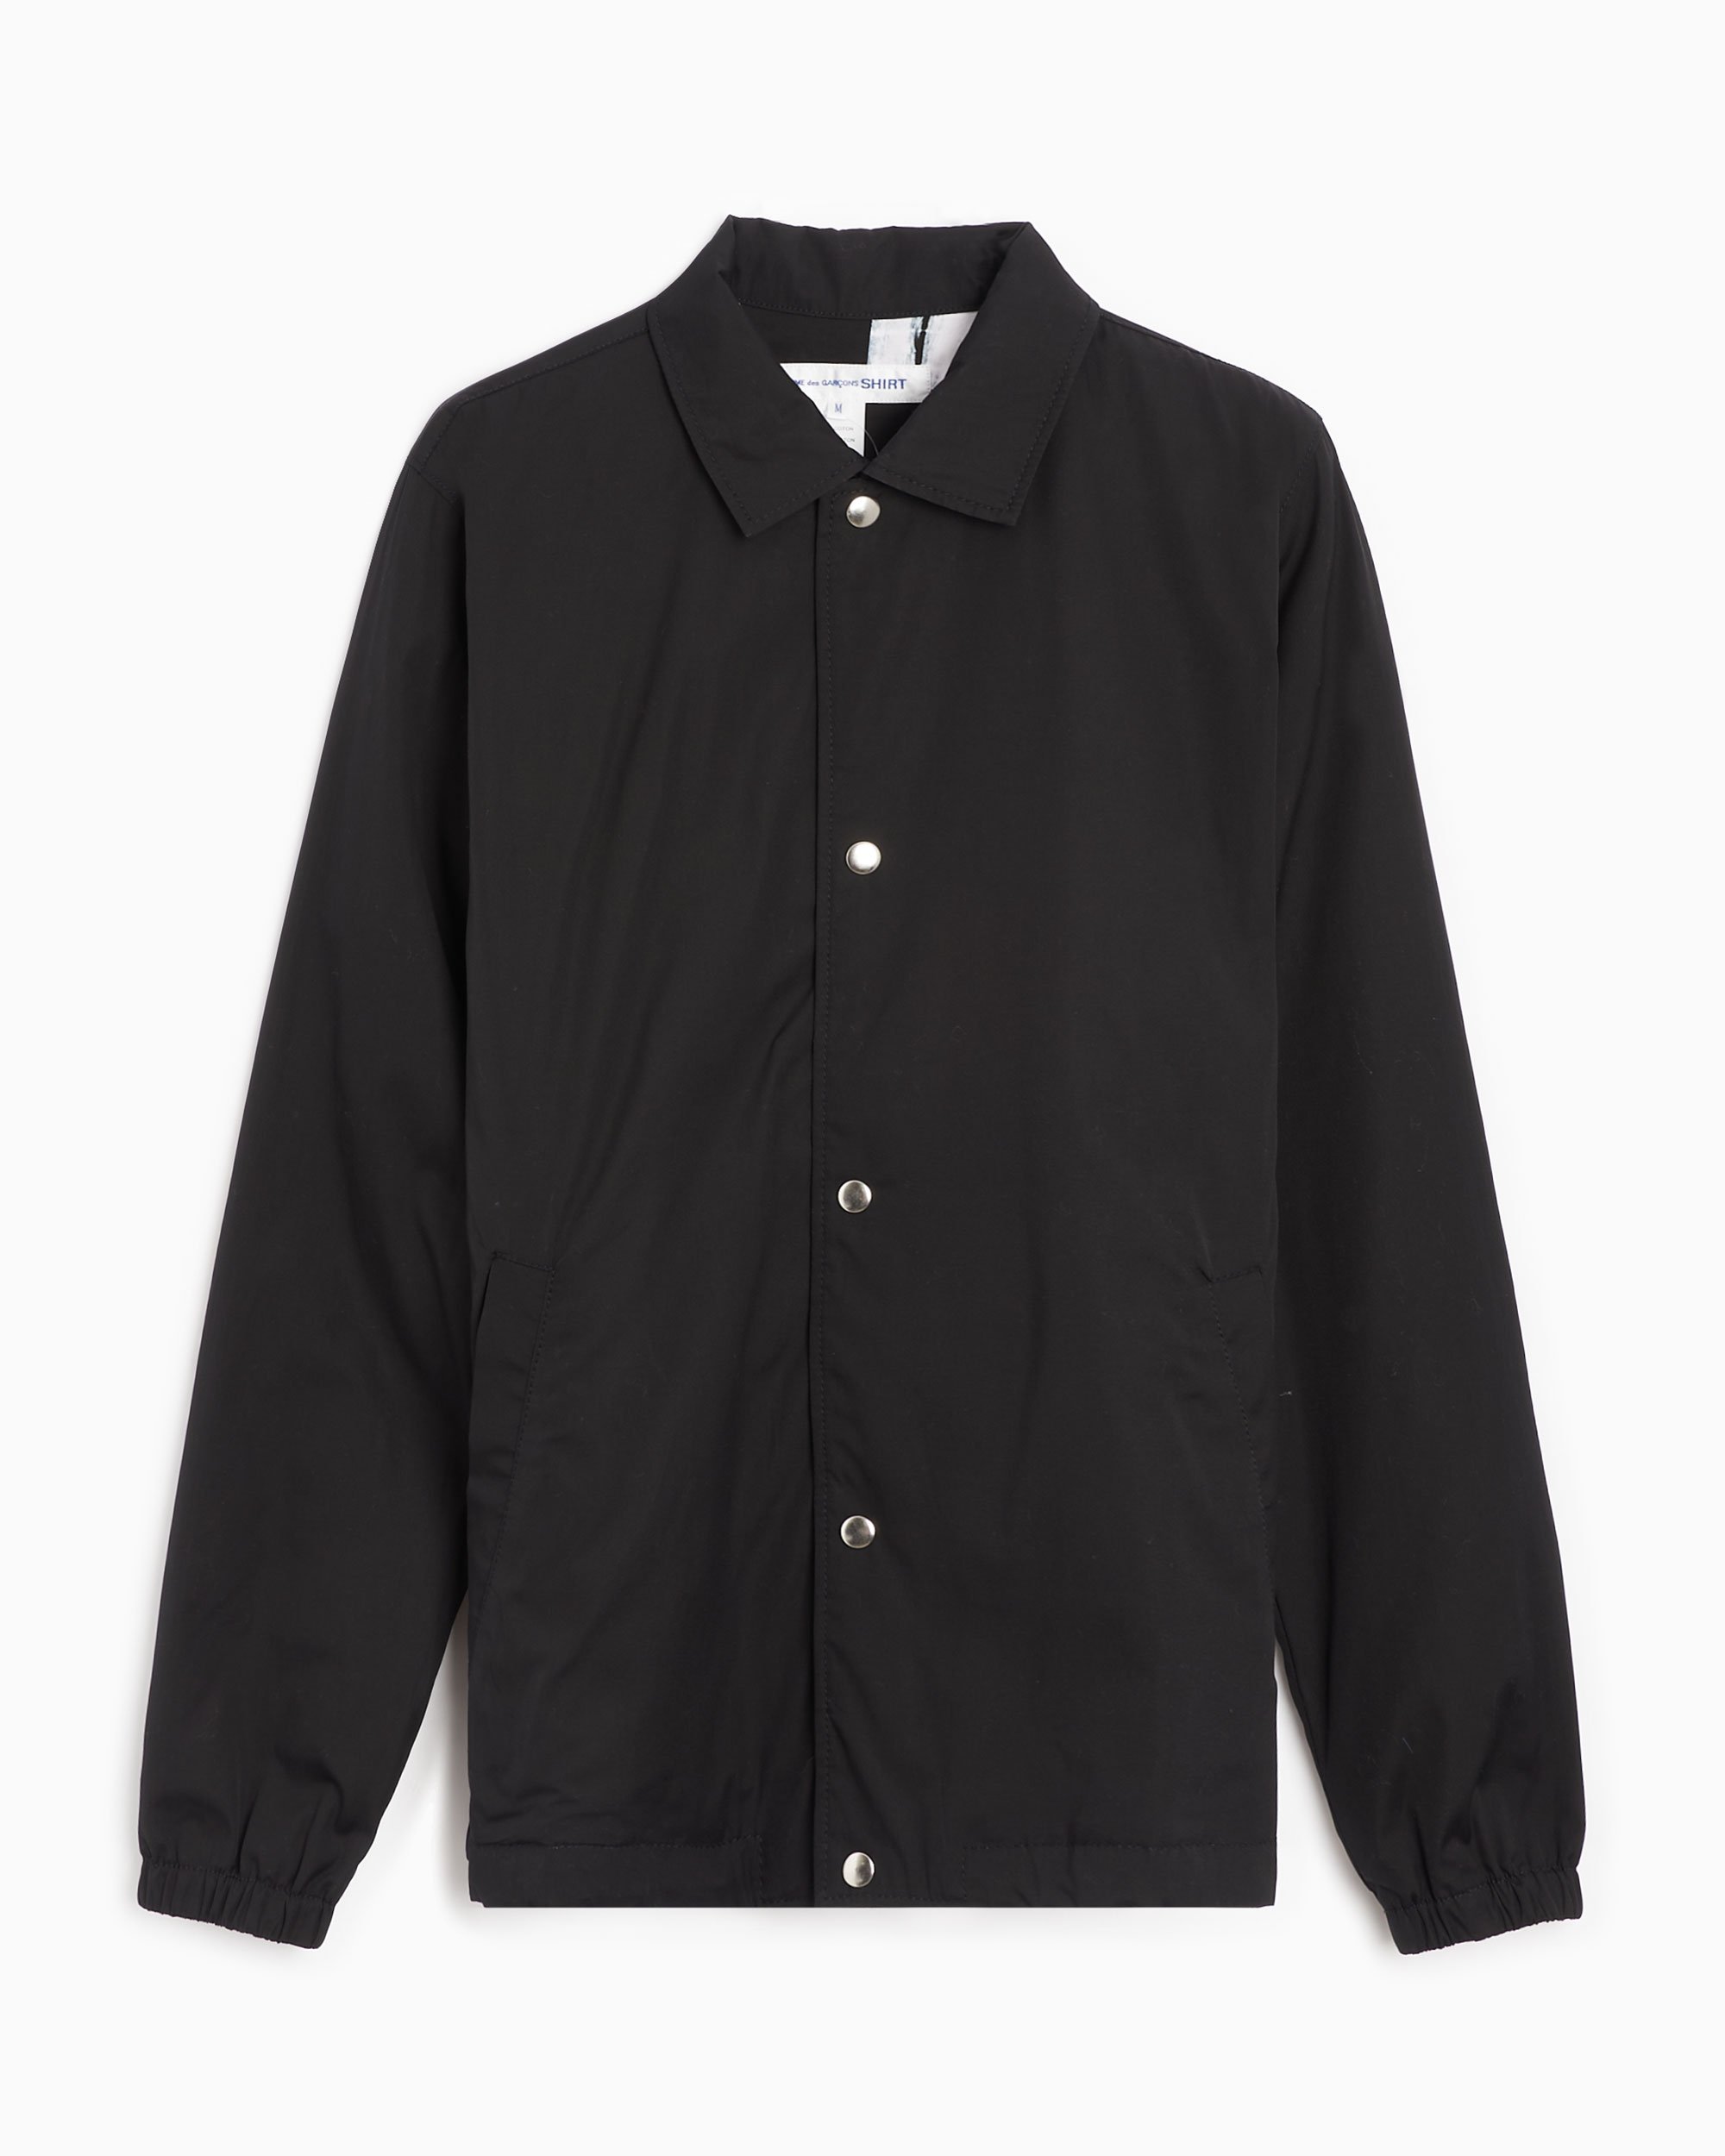 Comme Des Garçons Shirt Men's Woven Jacket Gray FI-J005-S22-1| Buy 